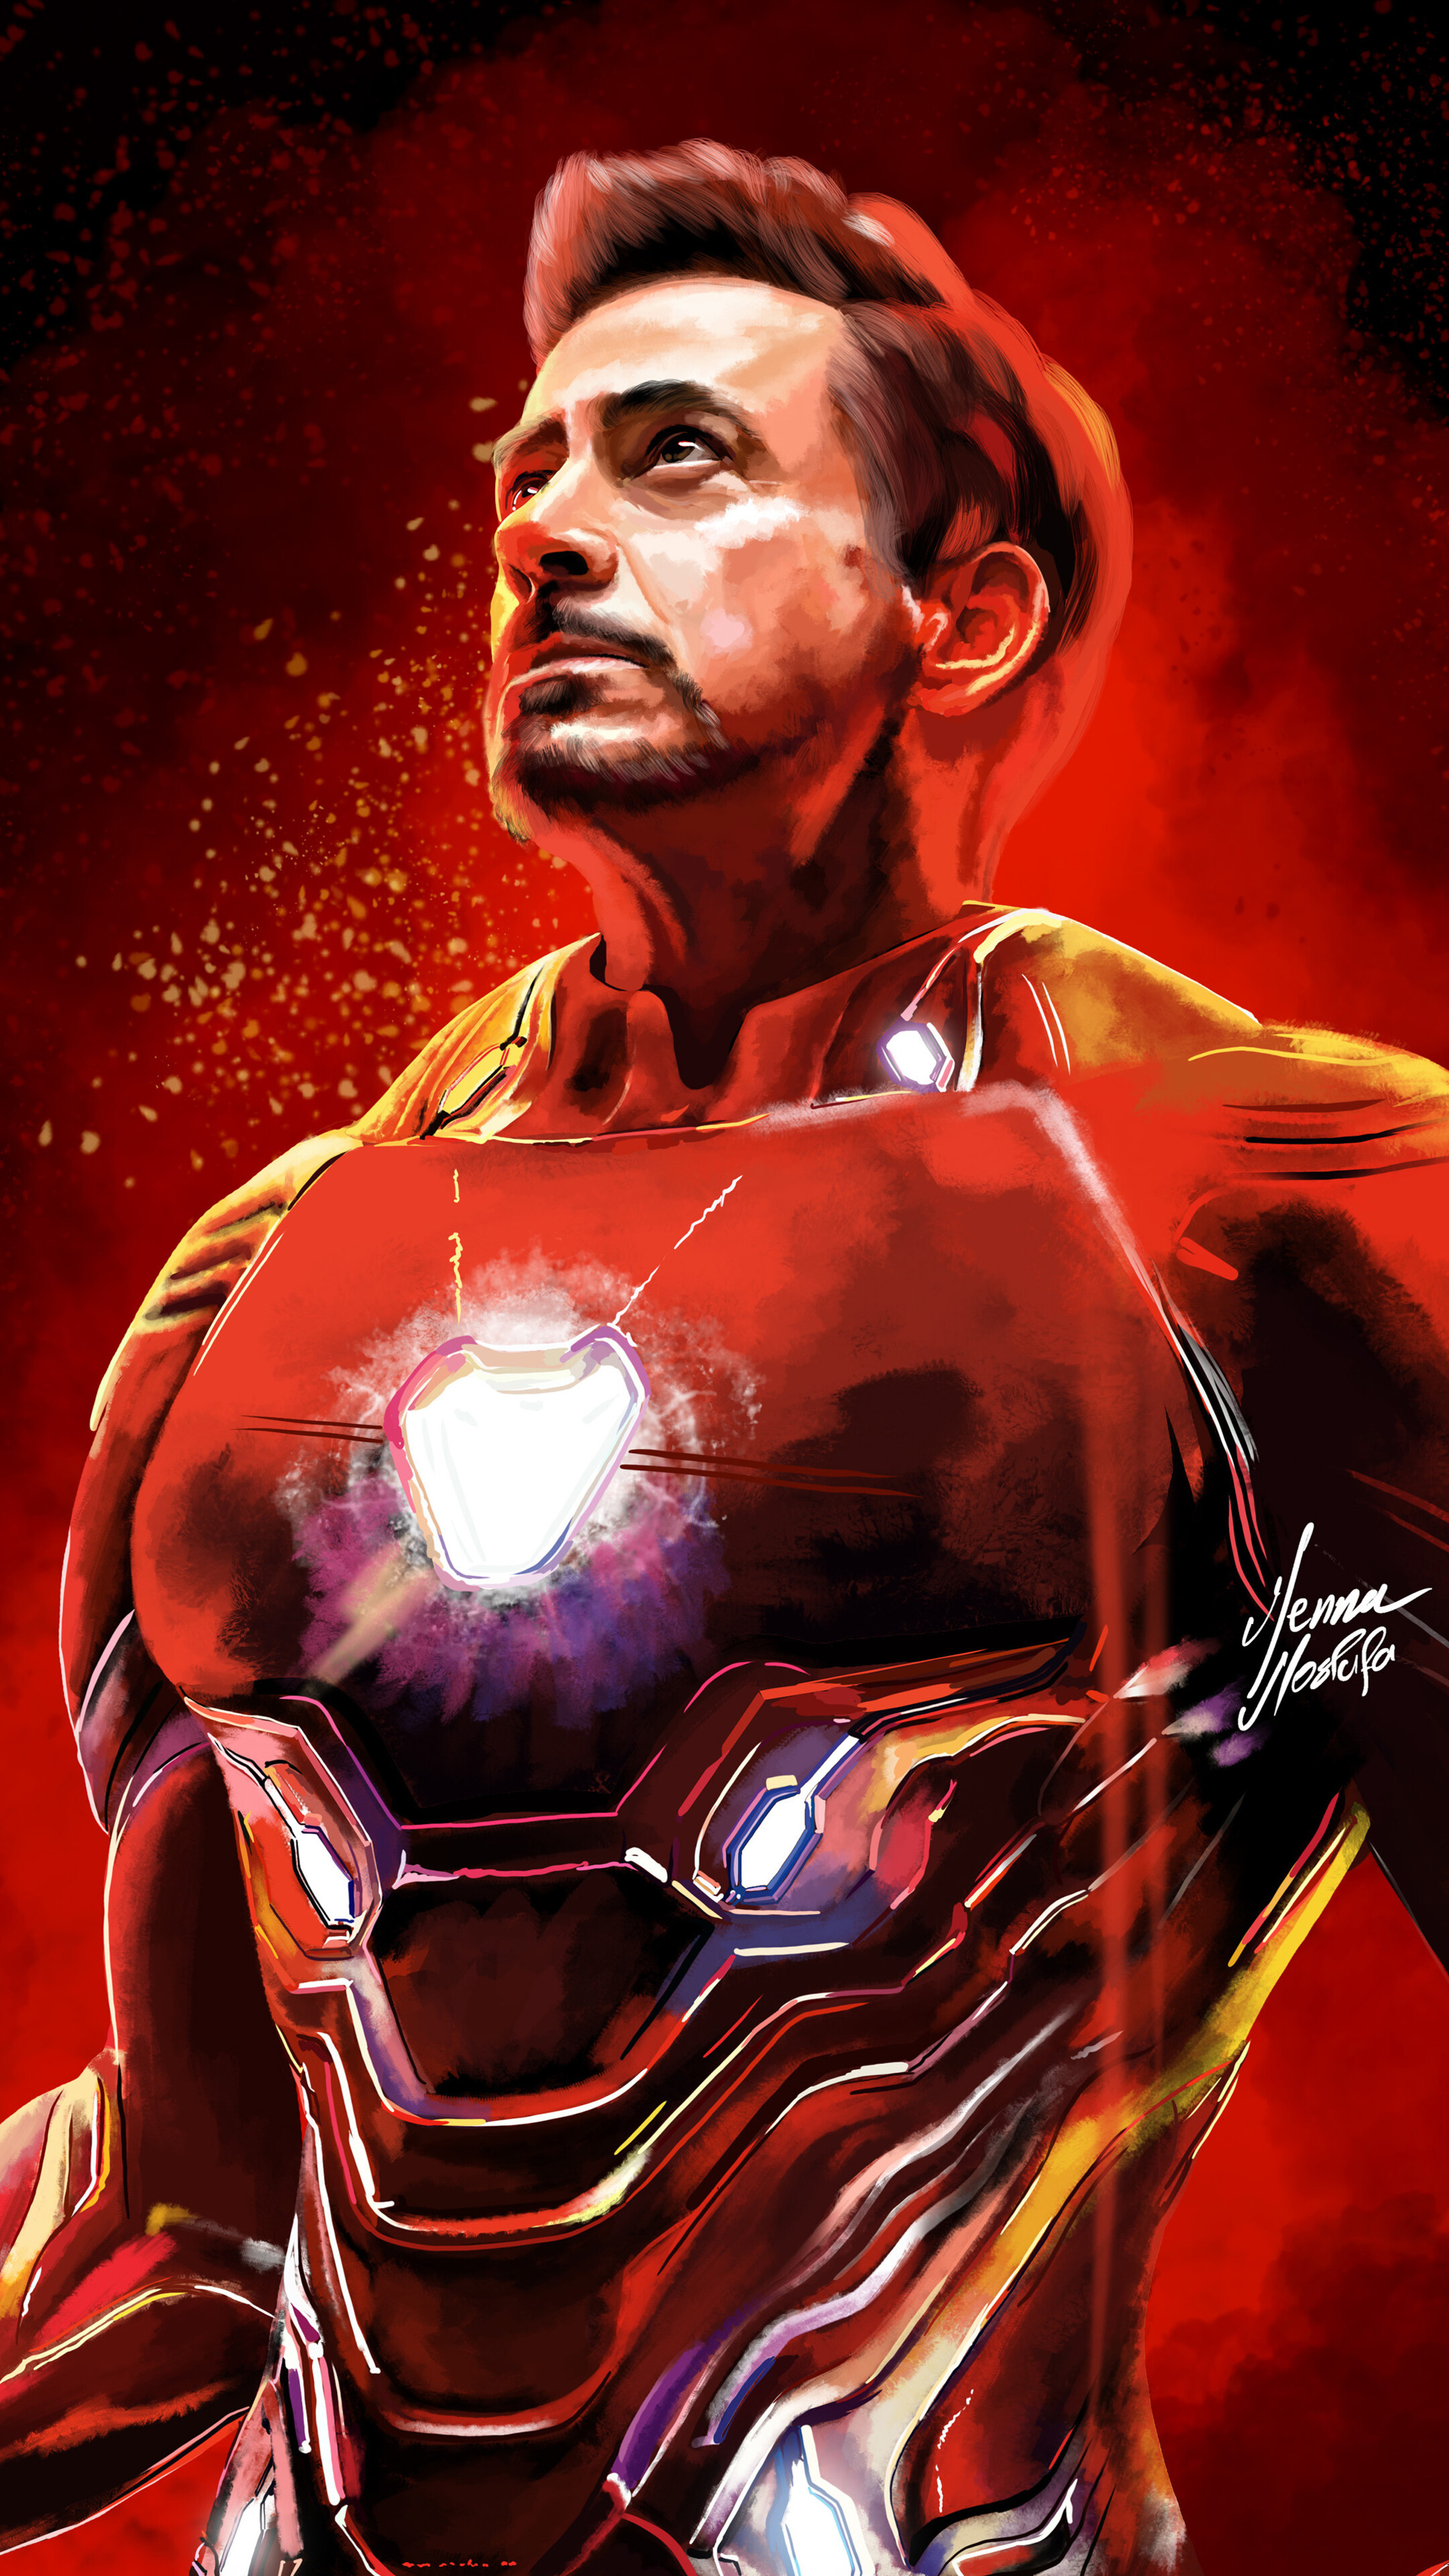 Tony Stark 1080P, 2k, 4k HD wallpaper, background free download